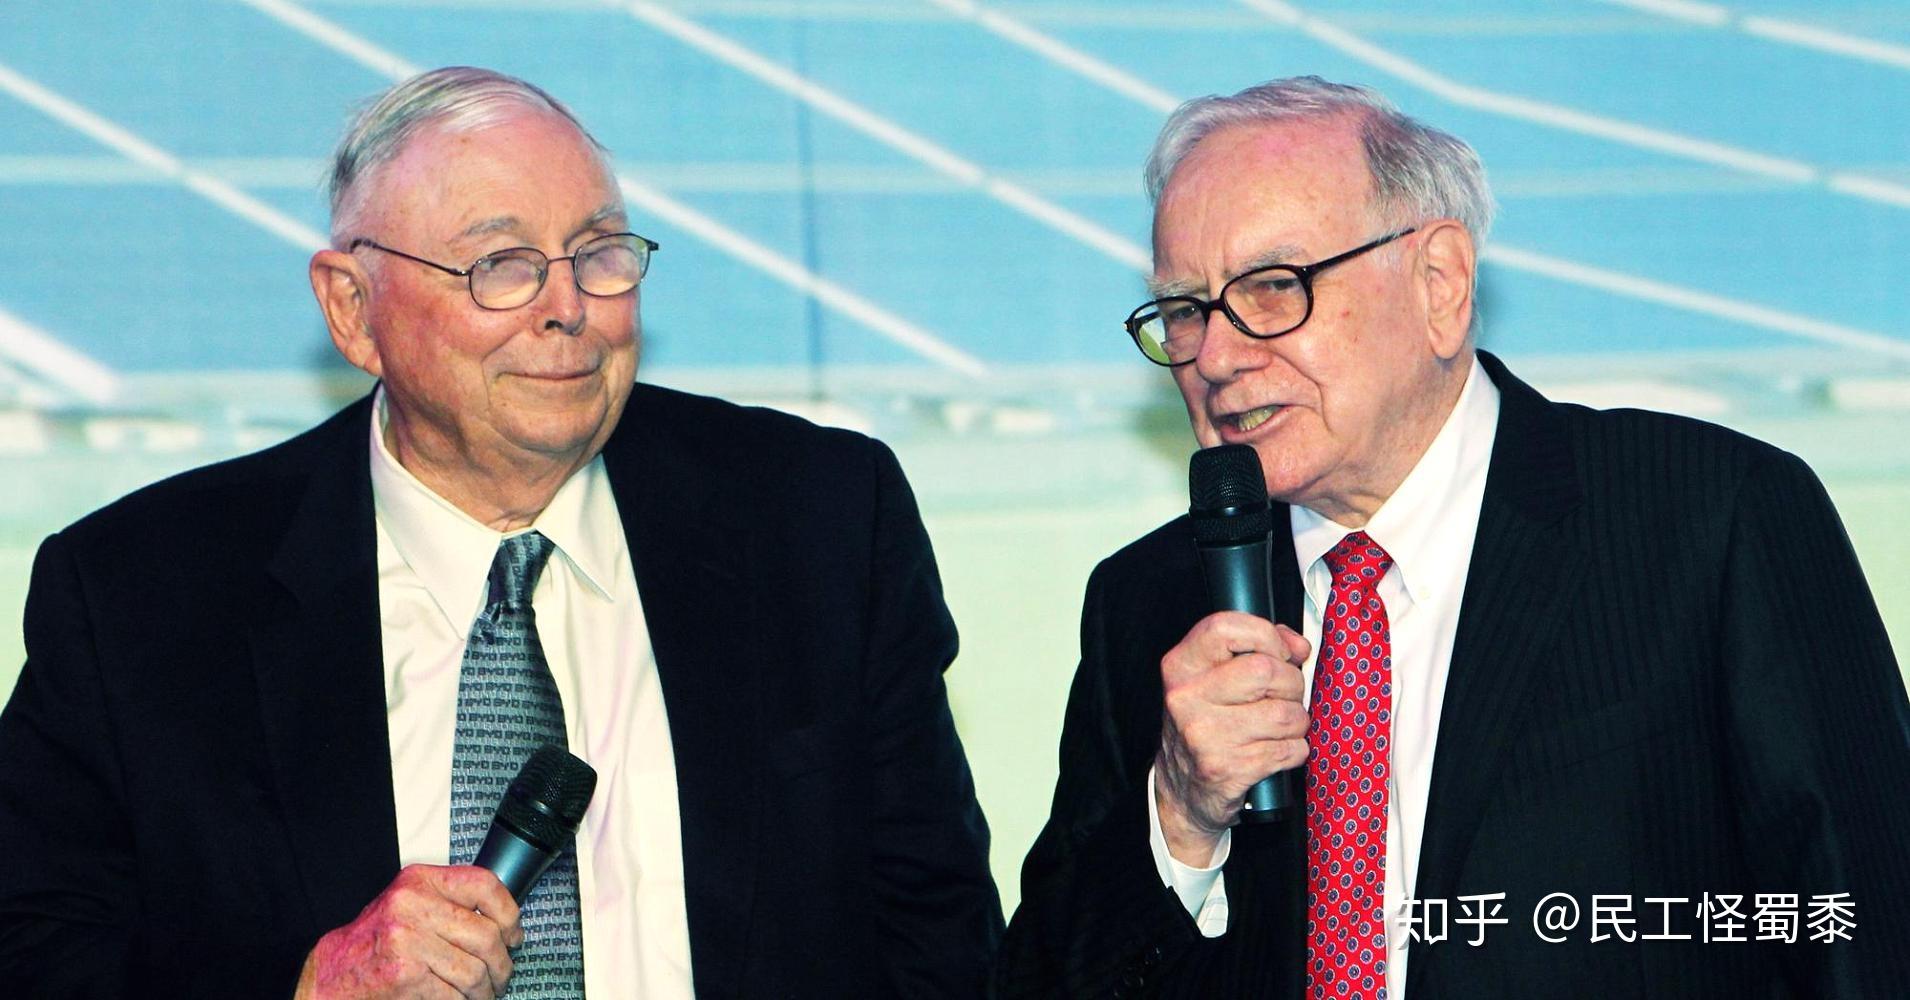 Charlie Munger makes his mark alongside Warren Buffett | David Moon